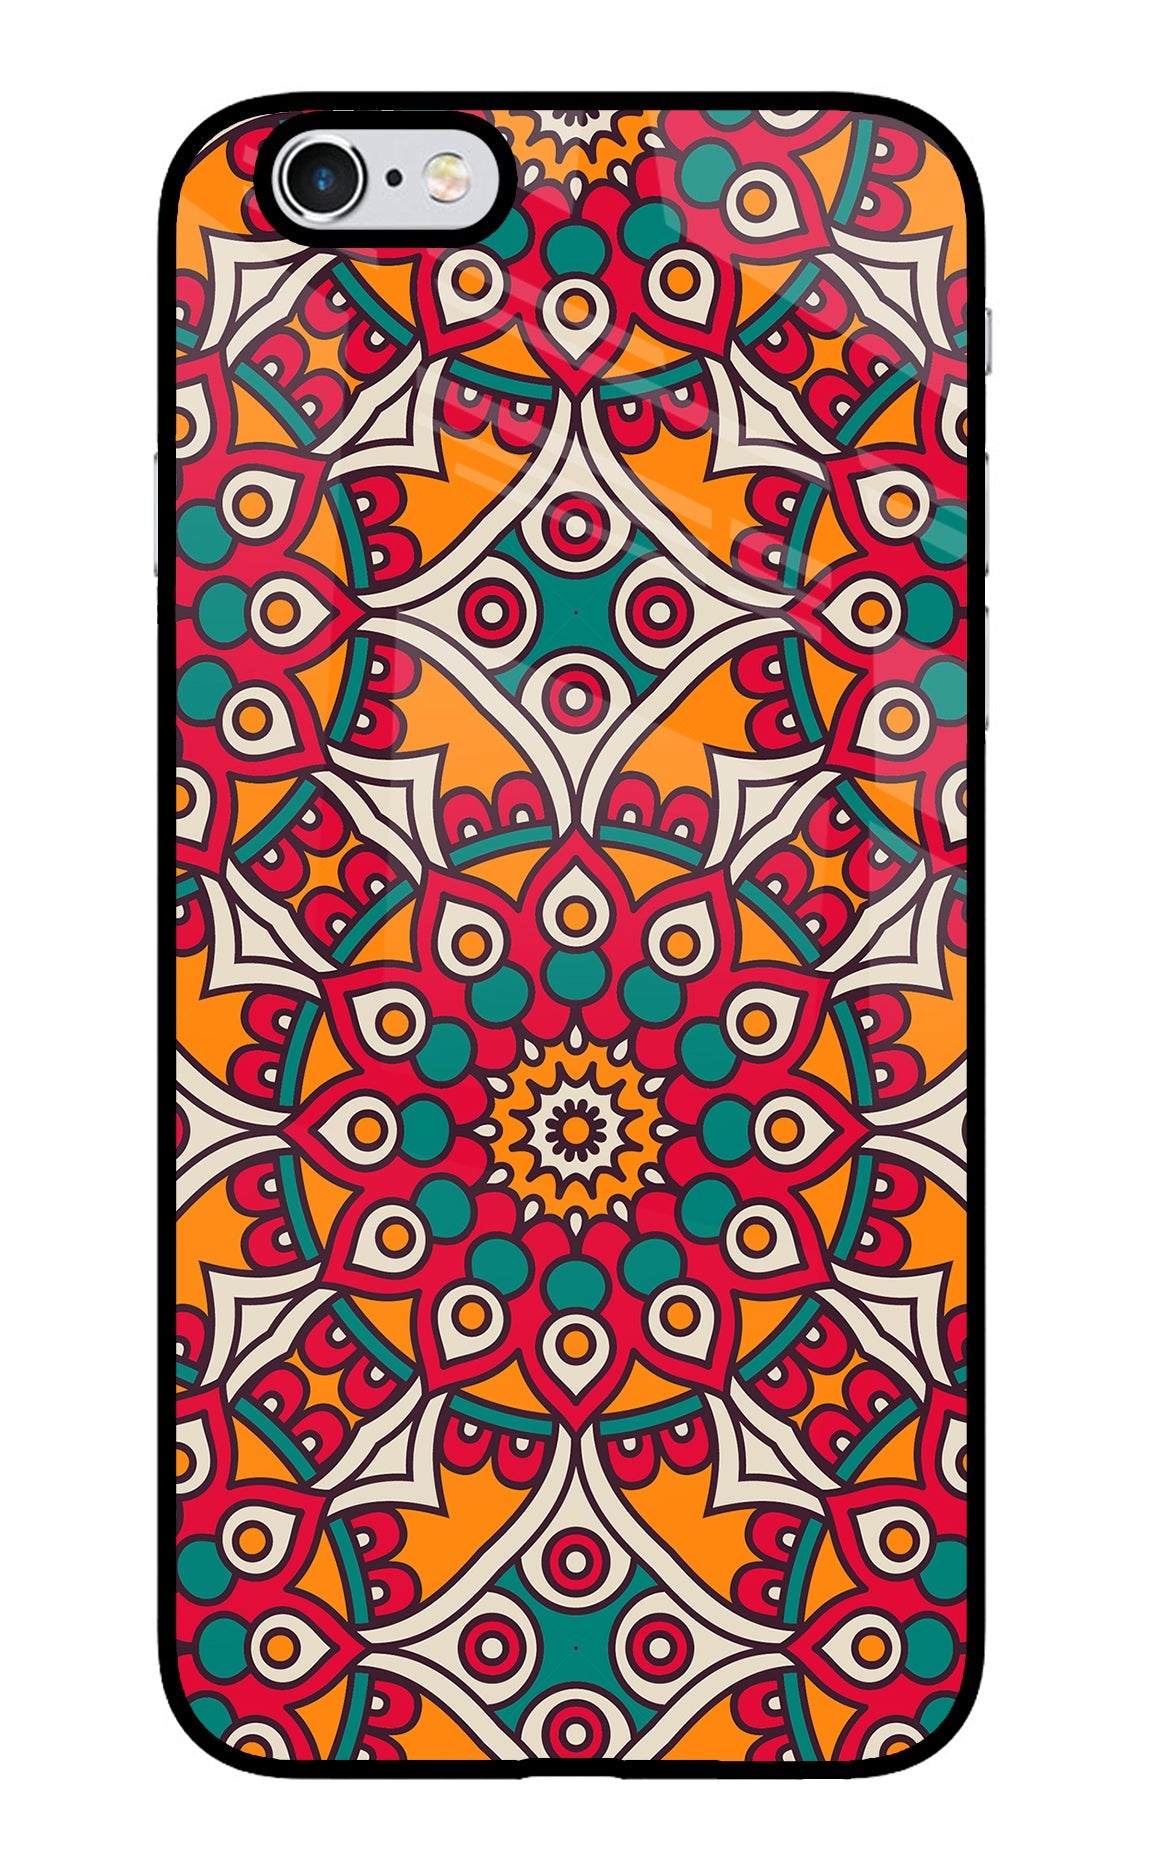 Mandala Art iPhone 6/6s Back Cover